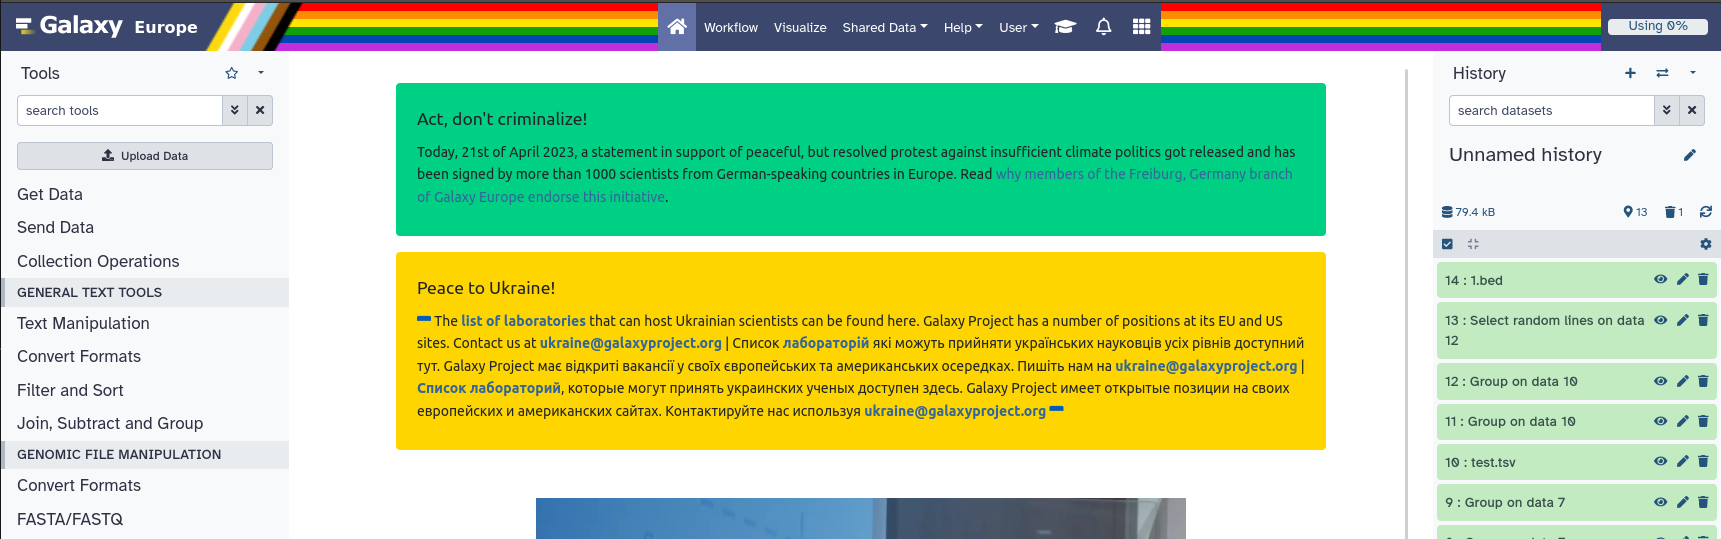 UseGalaxy.eu using the pride theme